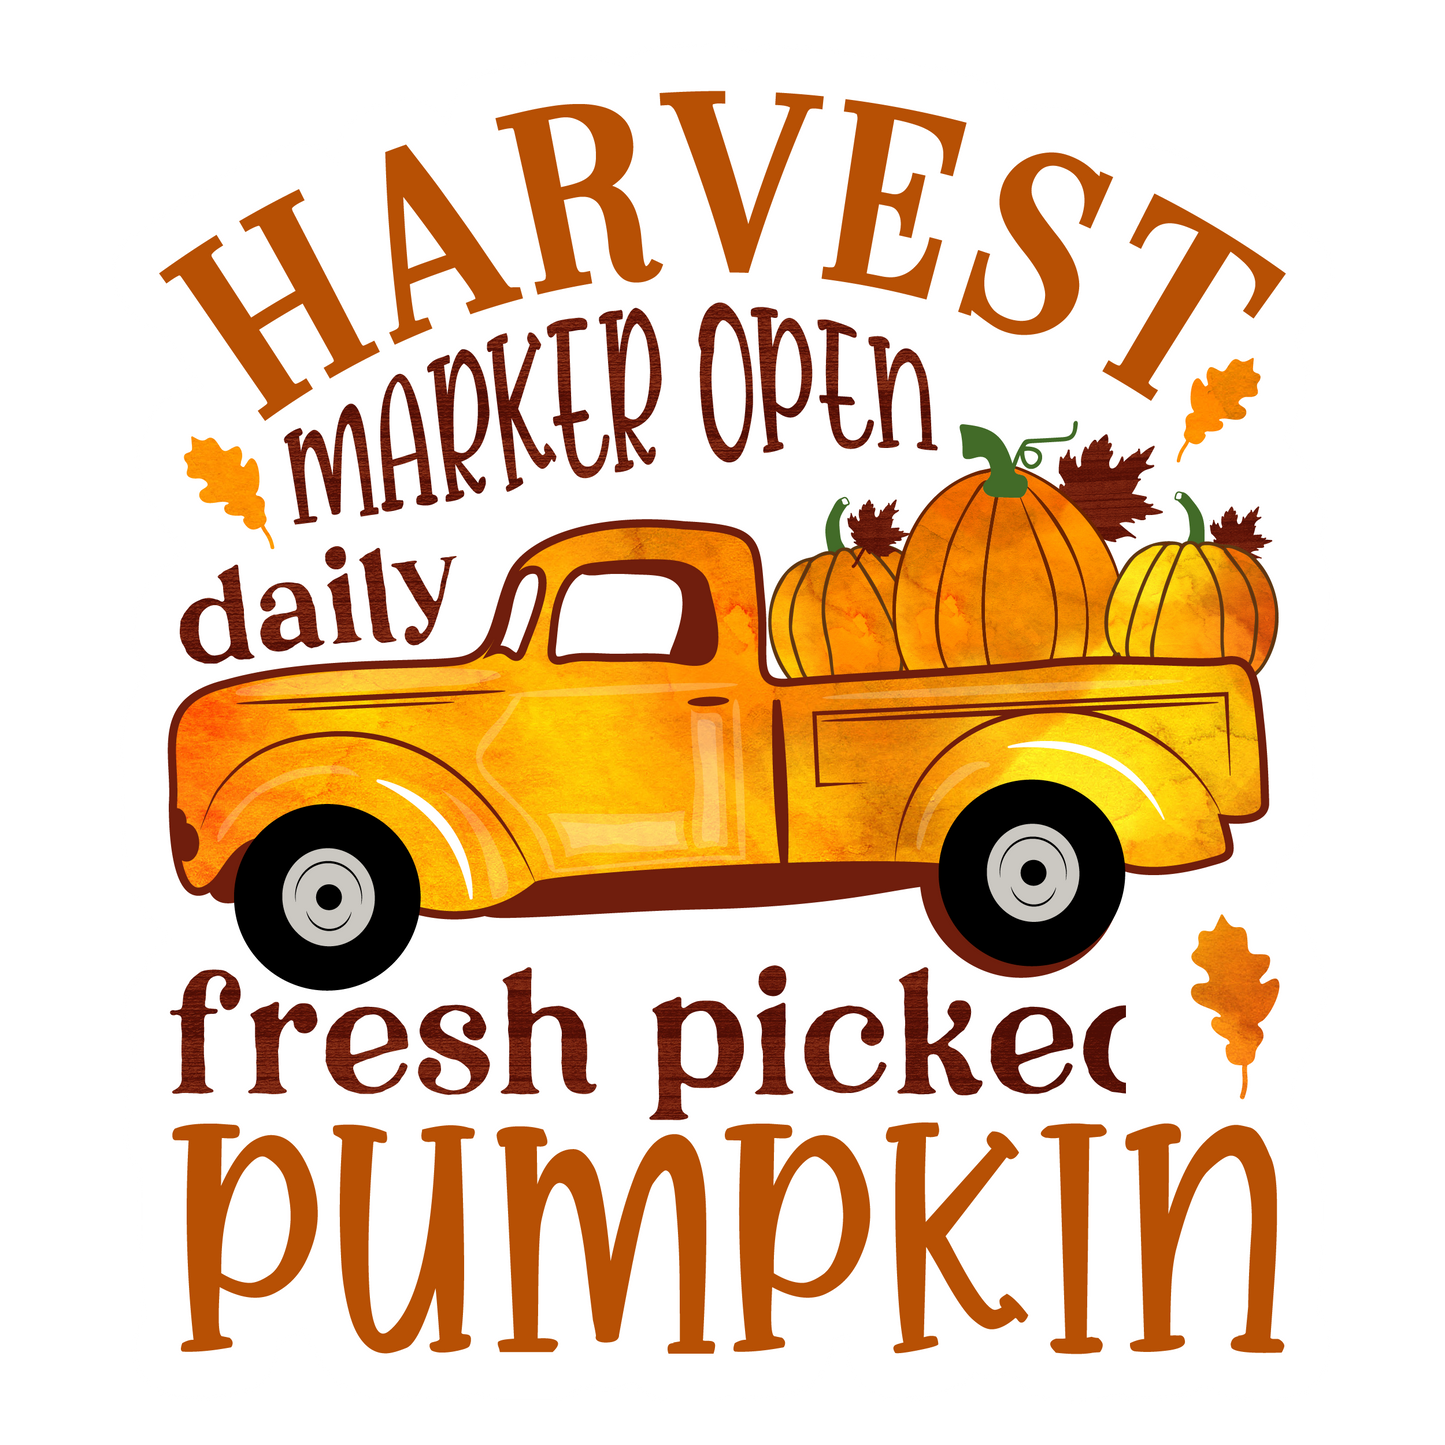 Inspirational Quote Harvest Marker Open Daily Fresh Picker Pumpkin Motivational Sticker Vinyl Decal Motivation Stickers- 5" Vinyl Sticker Waterproof